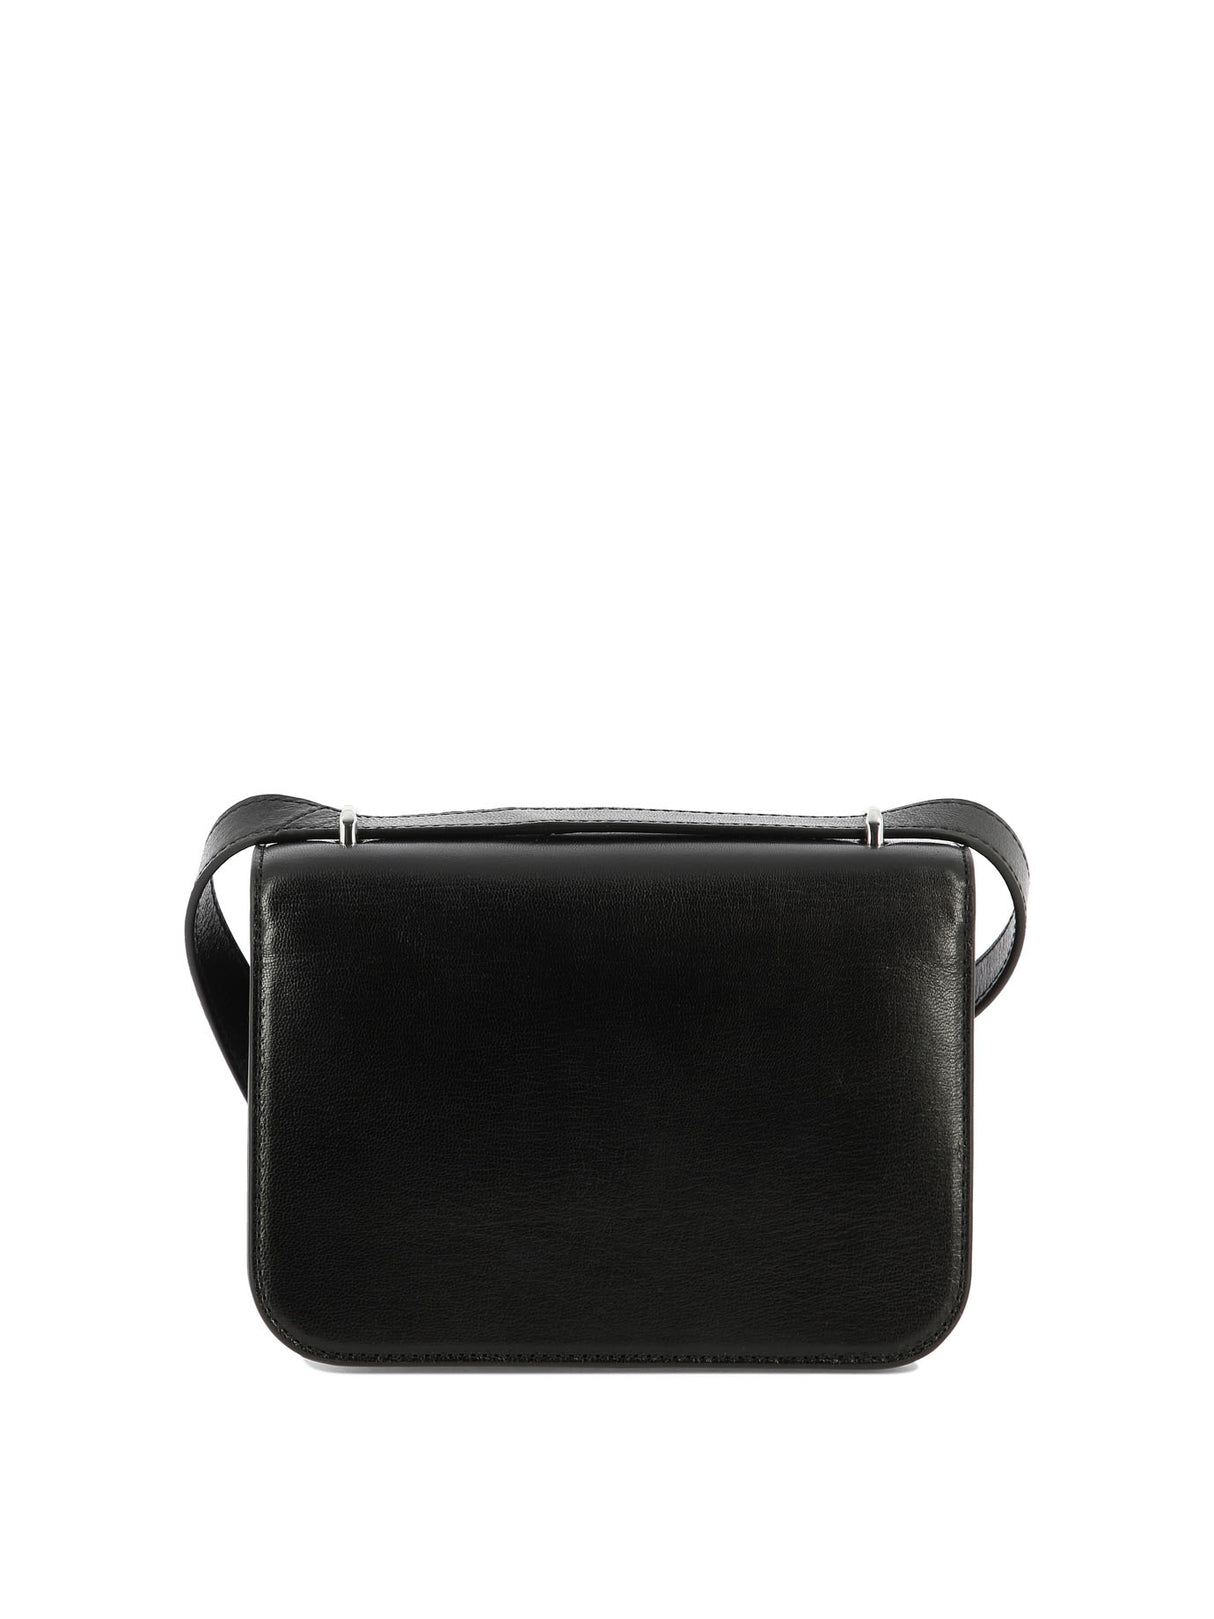 TORY BURCH Elegant Black Crossbody Handbag for Women